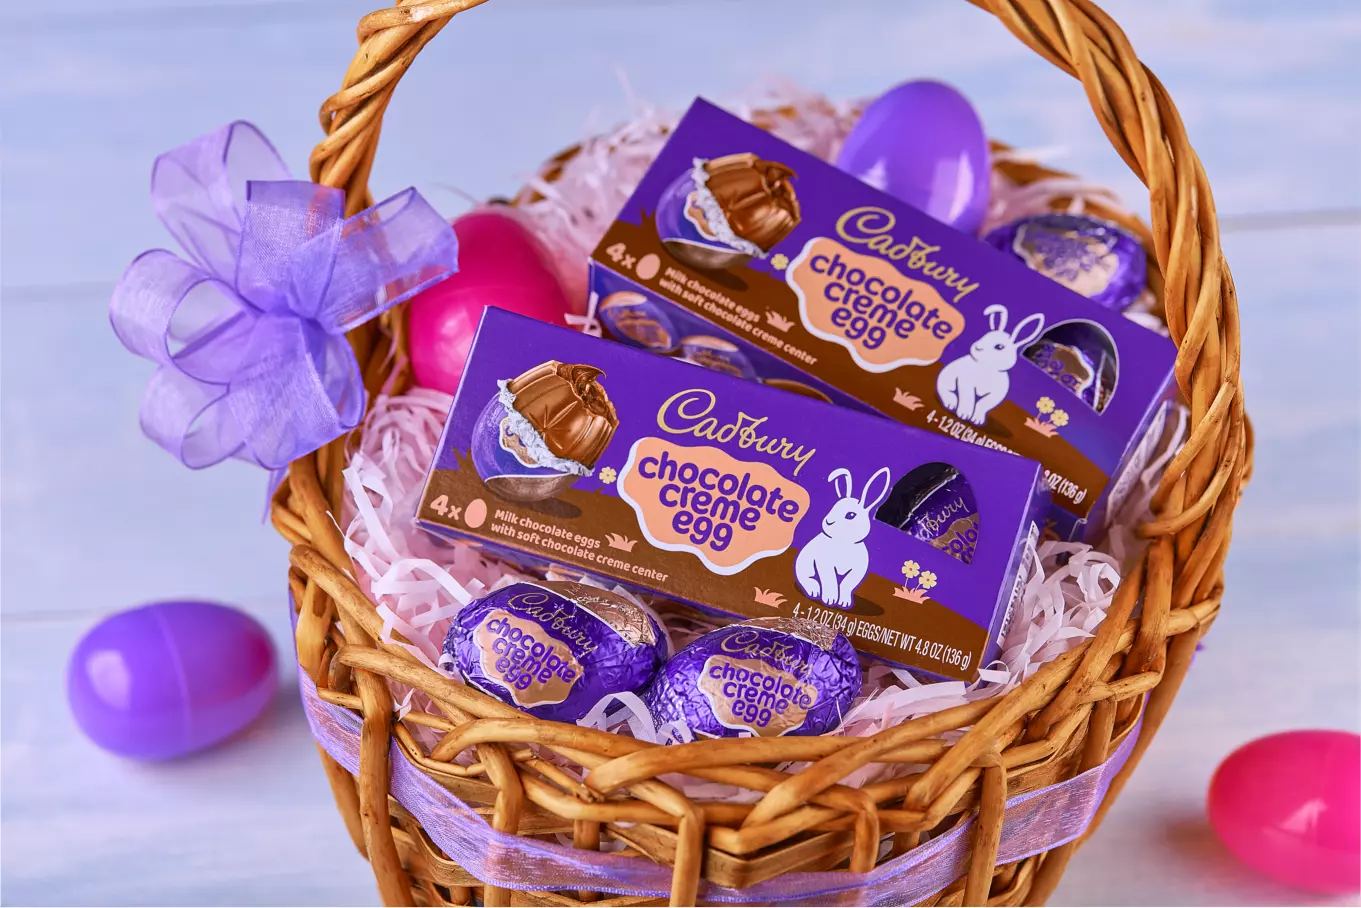 CADBURY CHOCOLATE CREME EGG Milk Chocolate Eggs inside Easter basket beside plastic Easter eggs